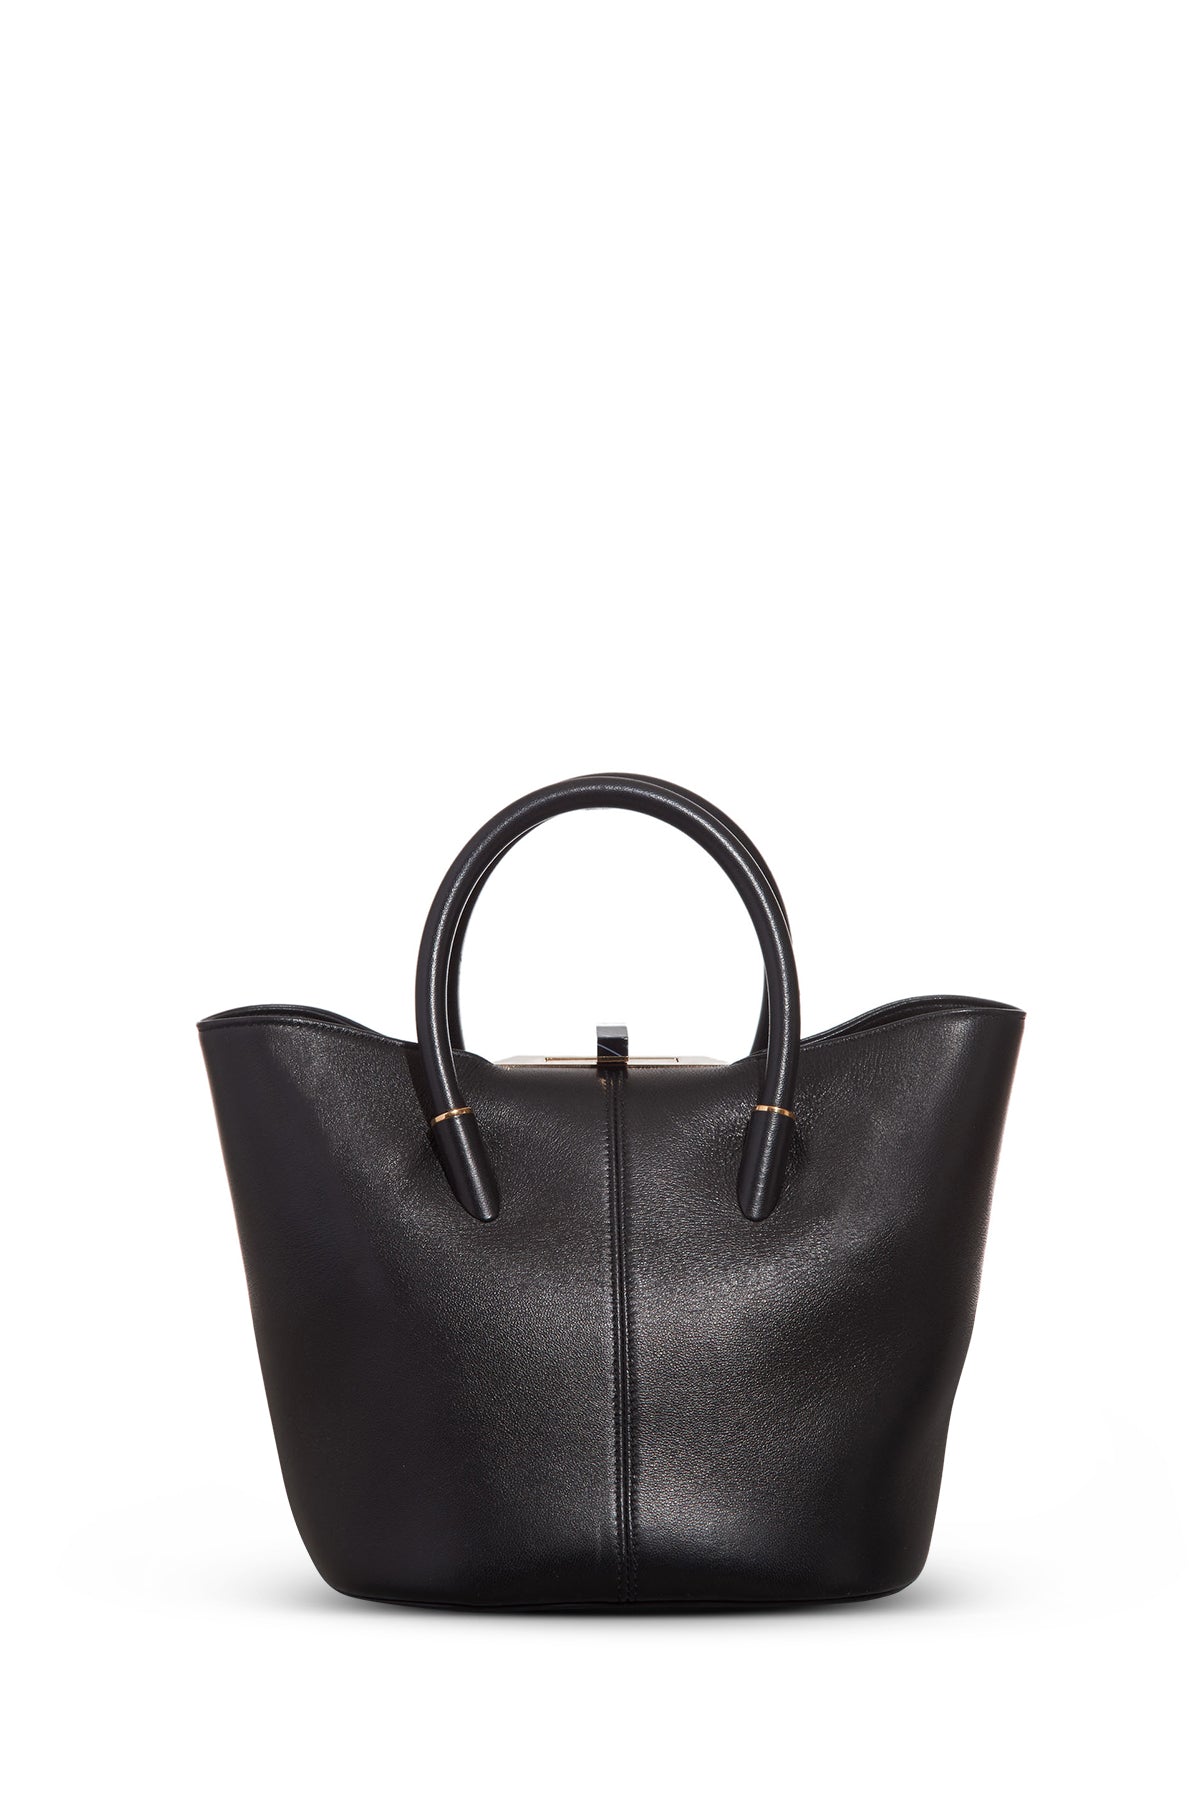 Baez Bag in Navy Nappa Leather – Gabriela Hearst